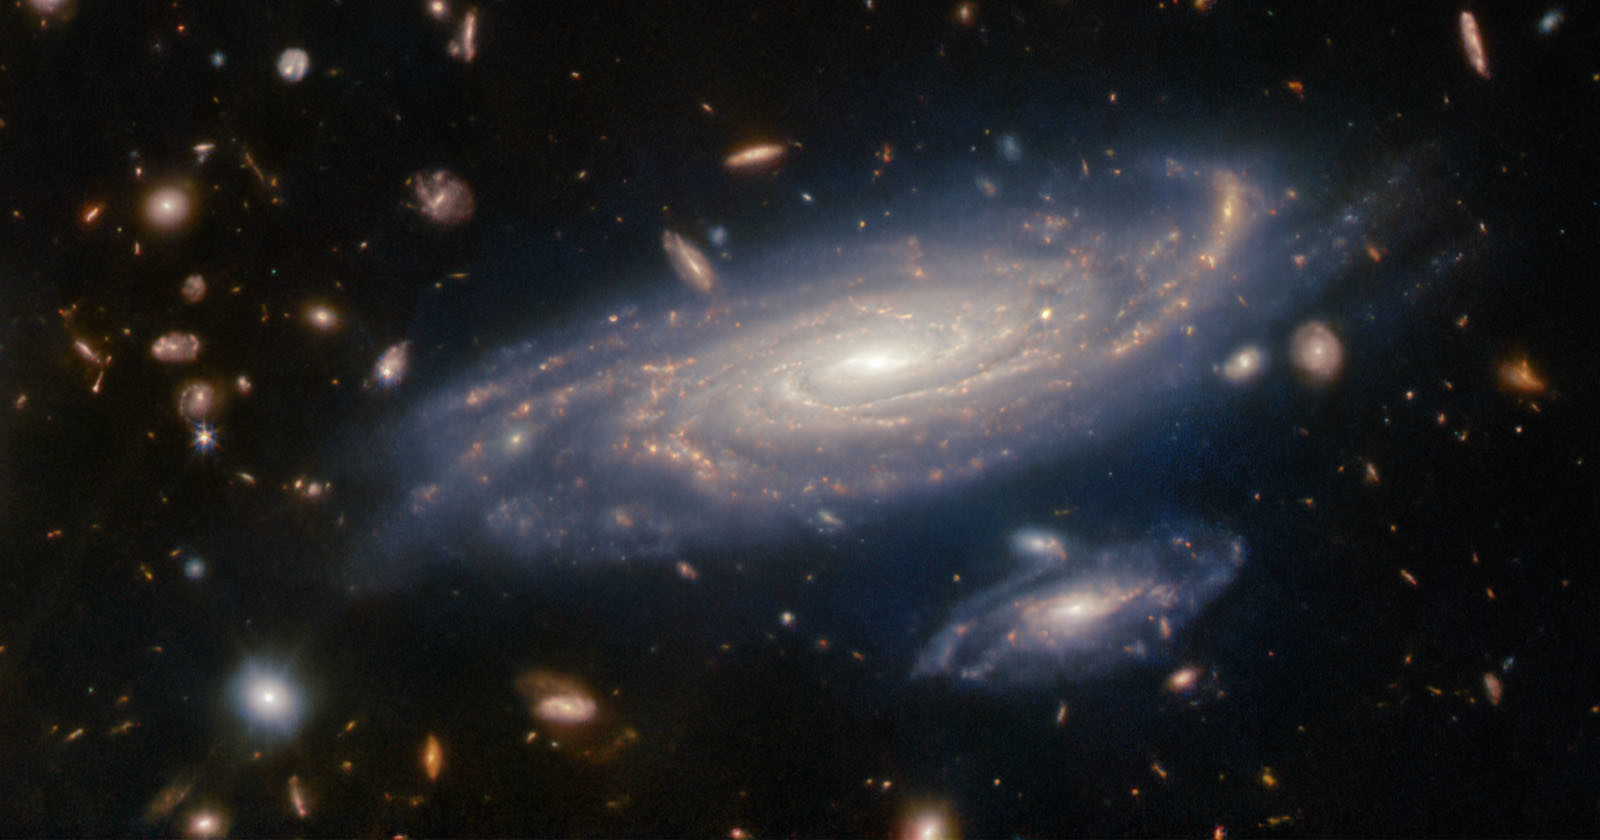  webb telescope photographs milky way-like spiral galaxy 